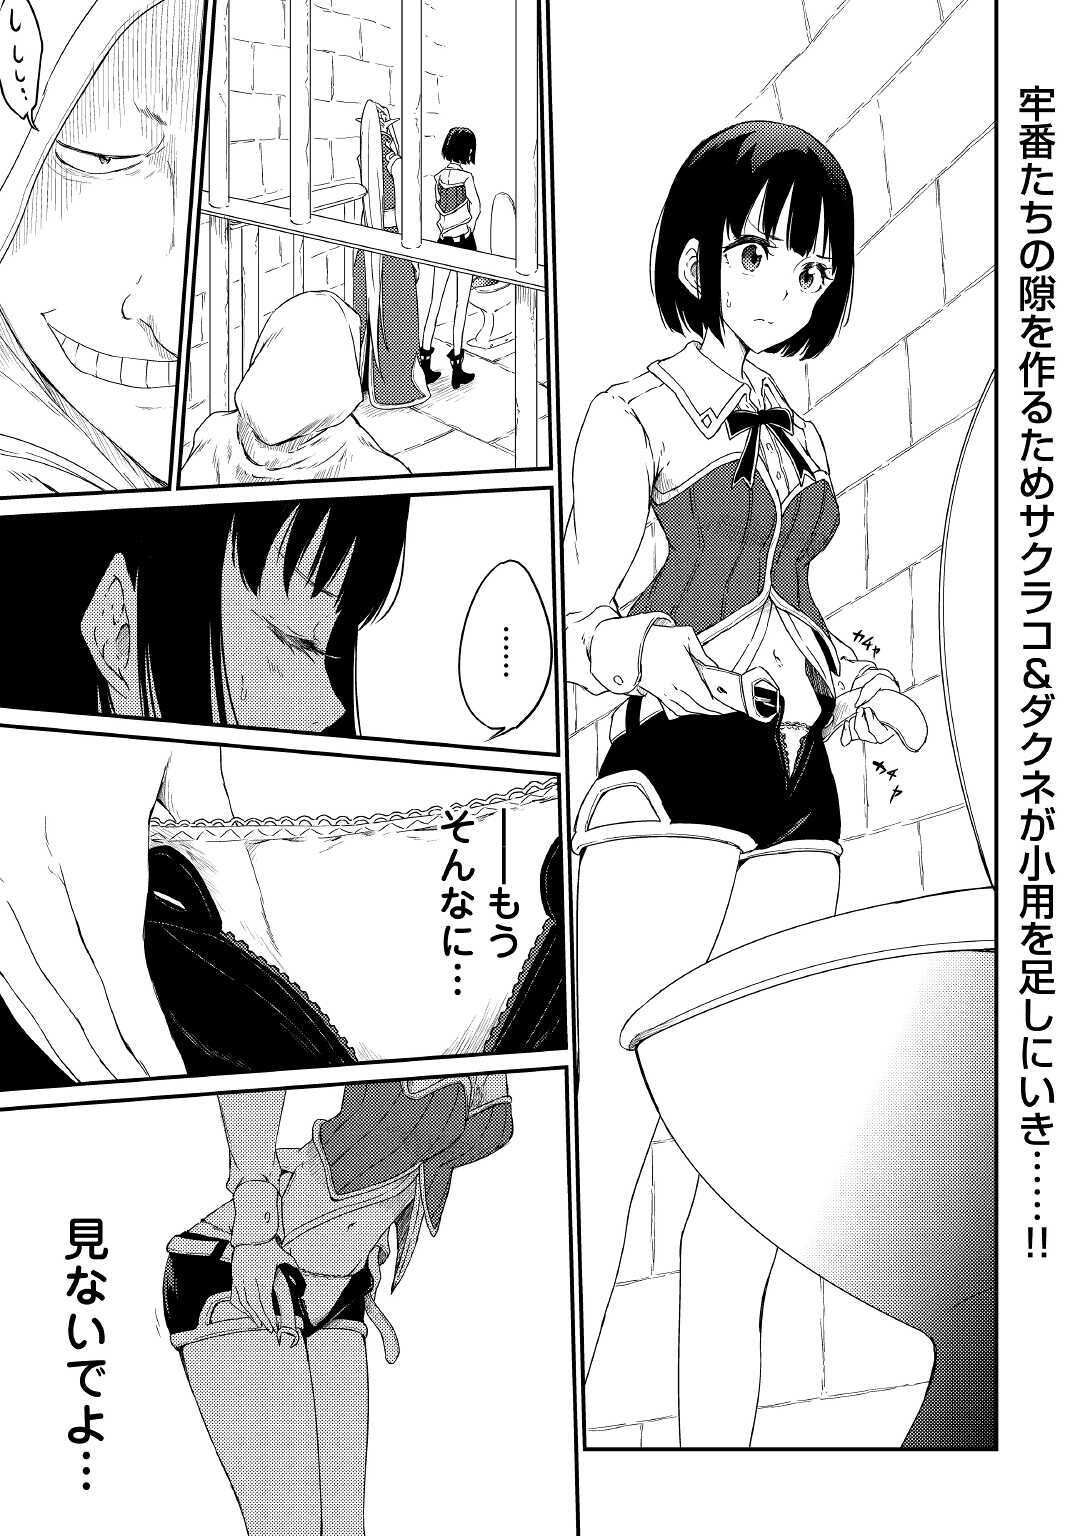 Yuusha no Mago to Maou no Musume - Chapter 30 - Page 1